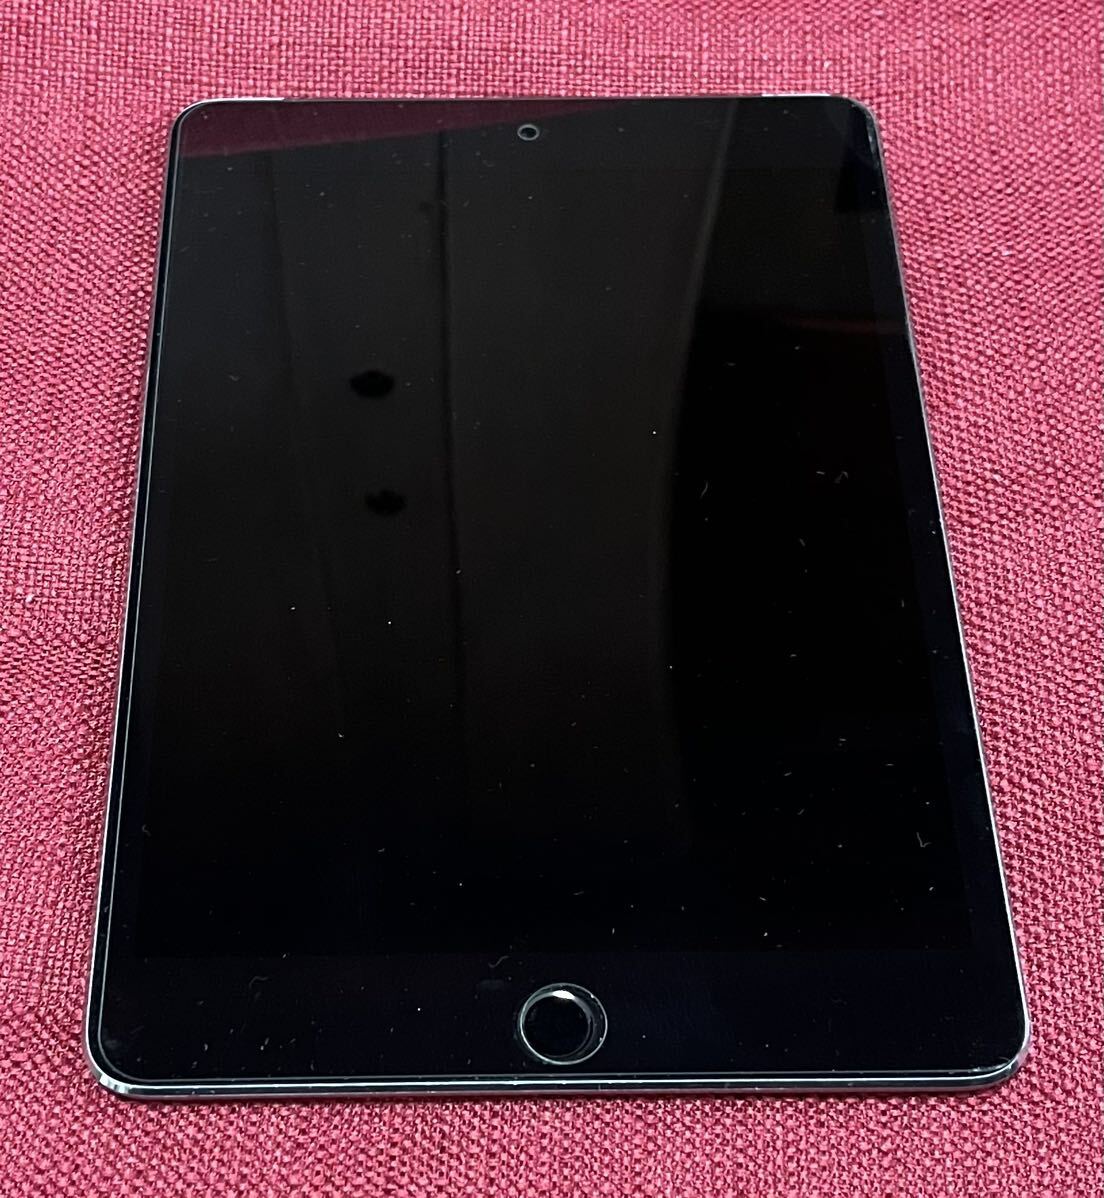 Apple iPad mini 4 16GB スペースグレー au○判定 A1550/Wi-Fi/Cellular/タブレット/本体/充電器の画像2